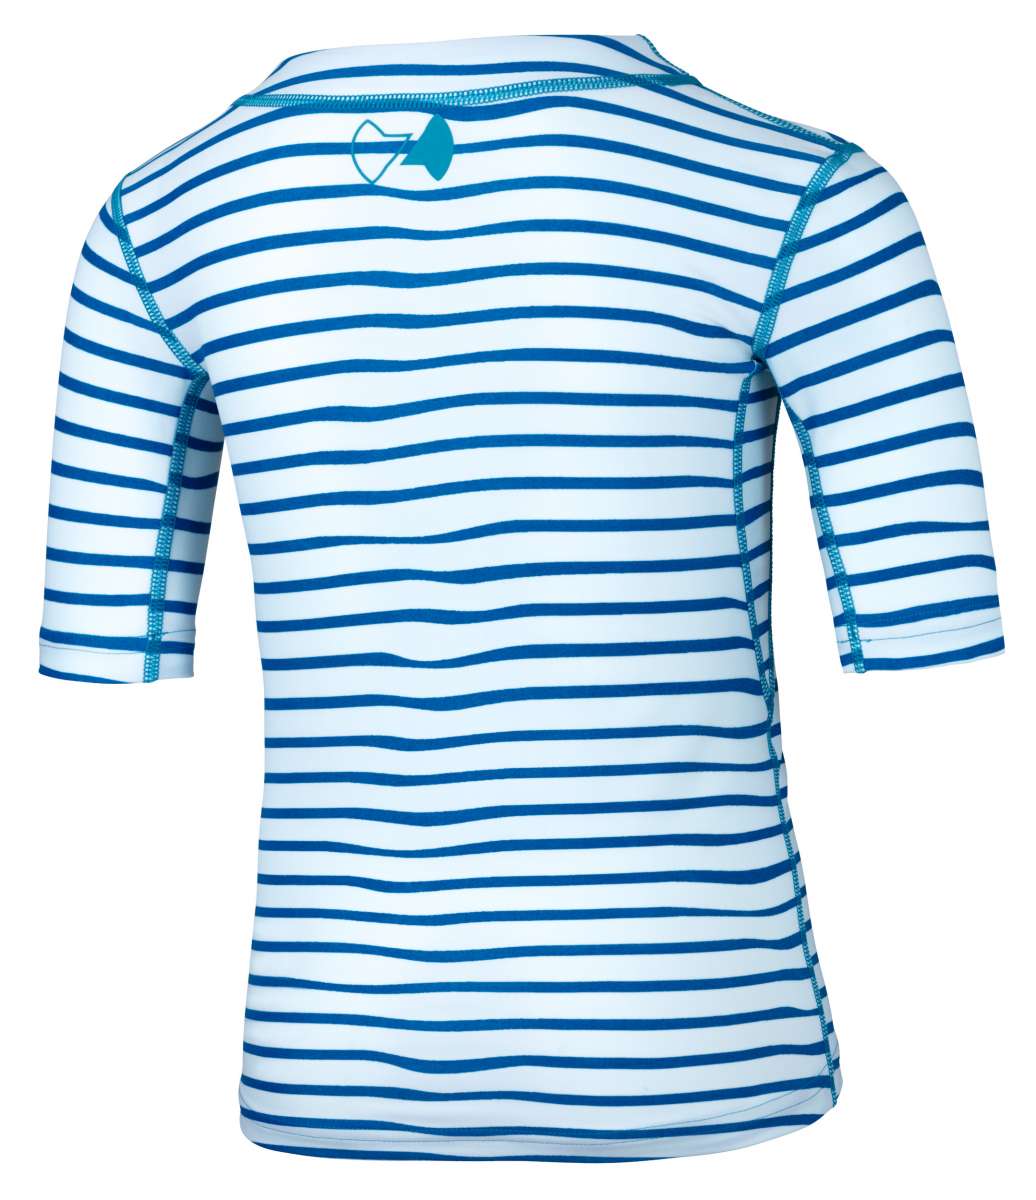 UV Shirt ’striped capri‘ back view 